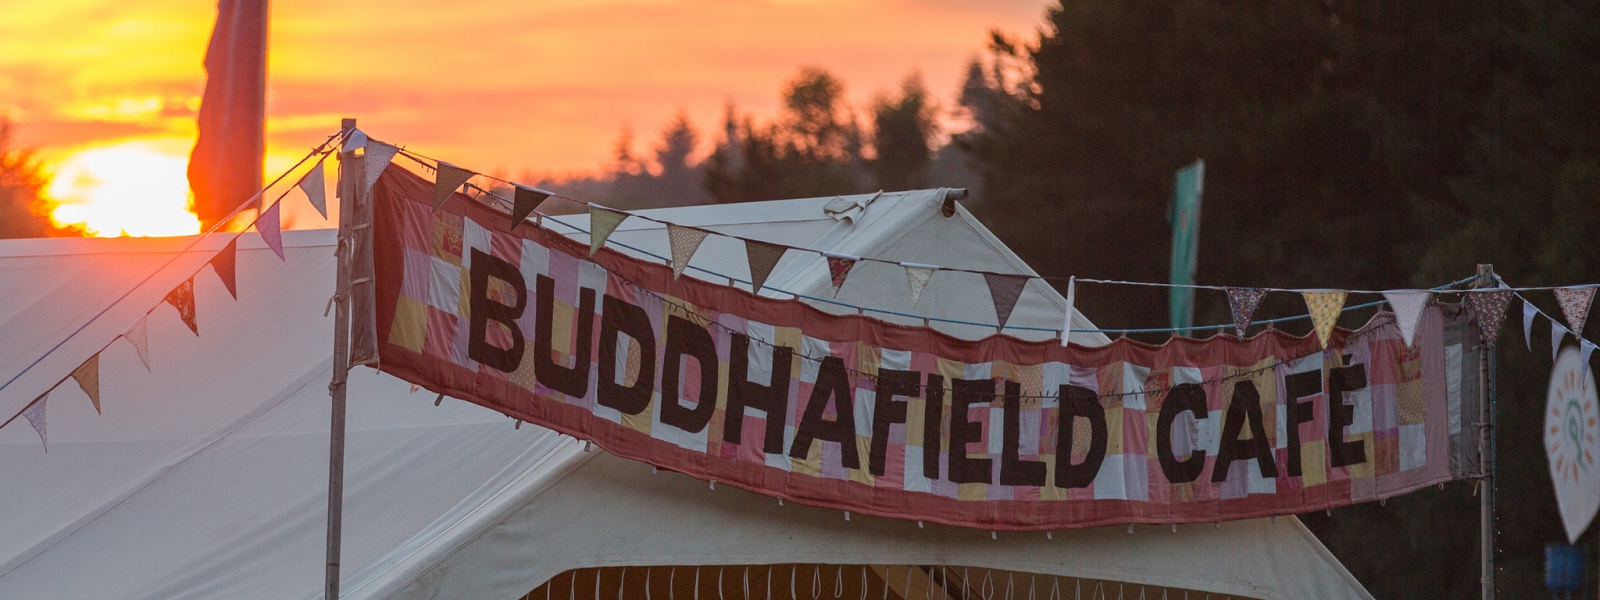 Buddhafield Cafe Tent